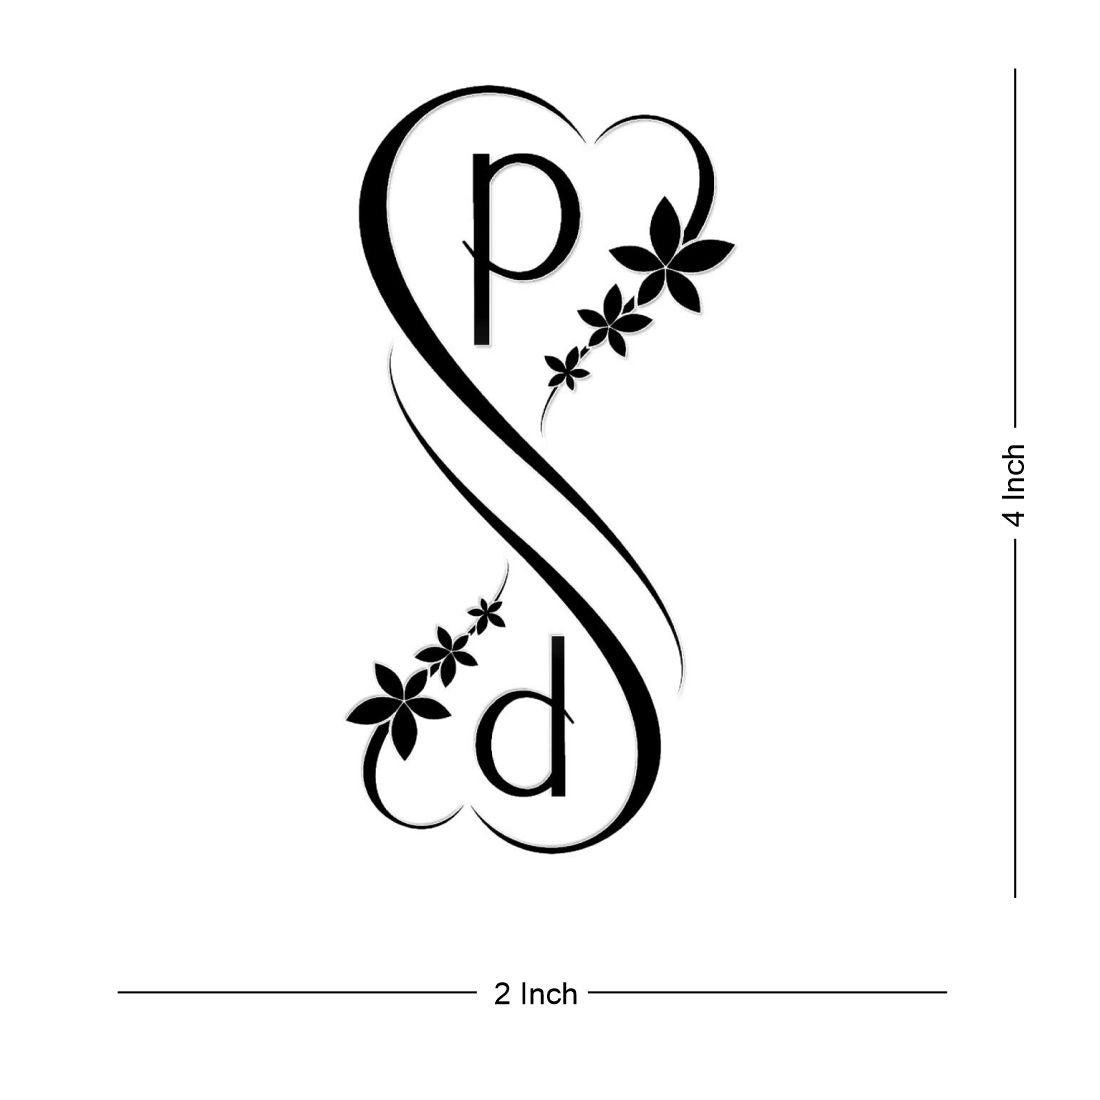 Beautiful S Letter Heart Tattoo Design for Front Hand  Stylish  Easy  Heart Mehndi Design  YouTube